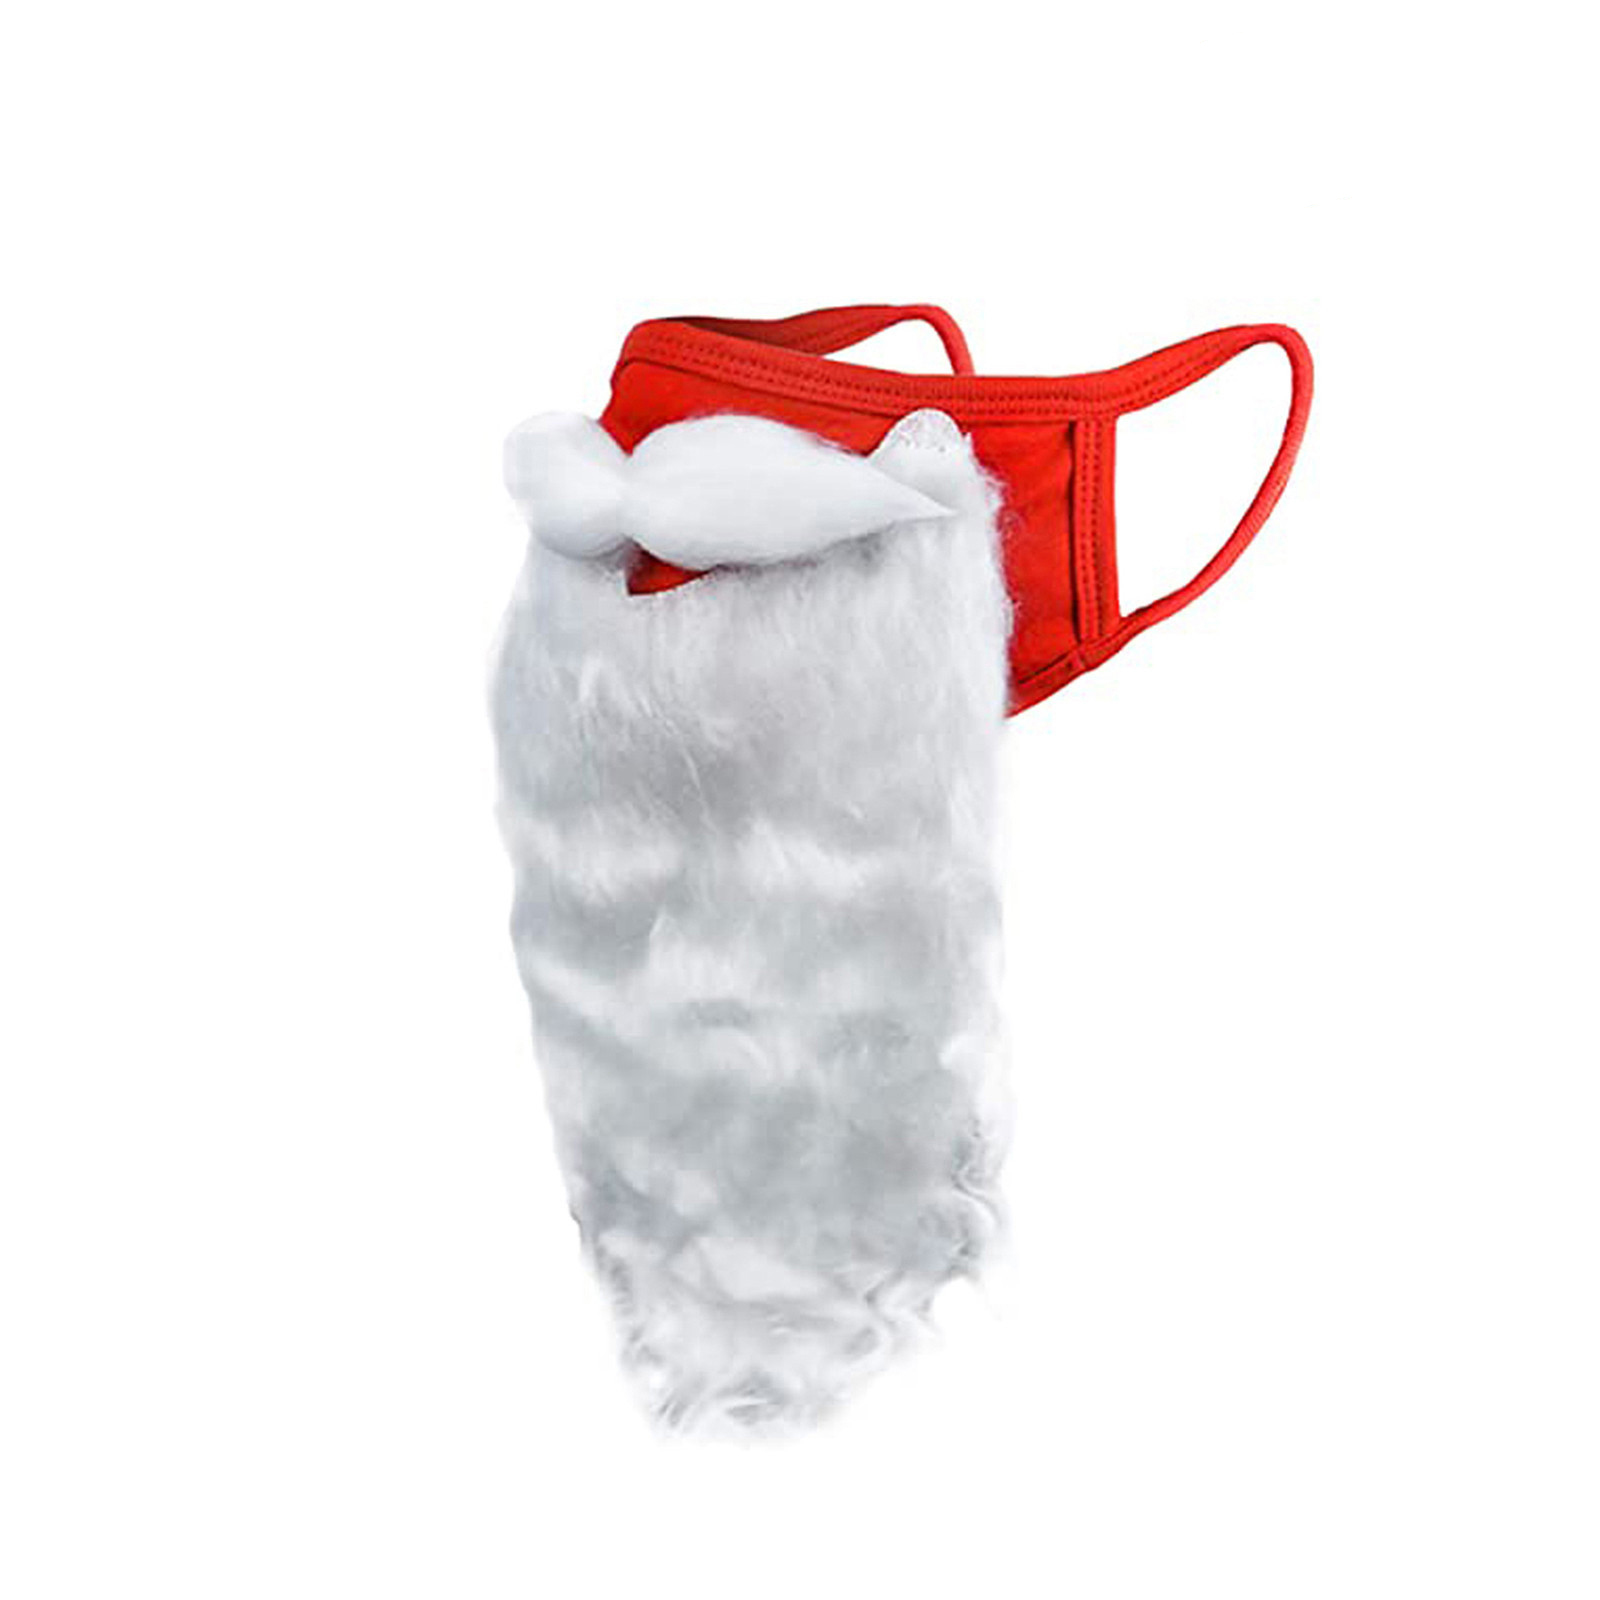 Creative Christmas Santa Beard Mask Funny Festive Costume Accessory